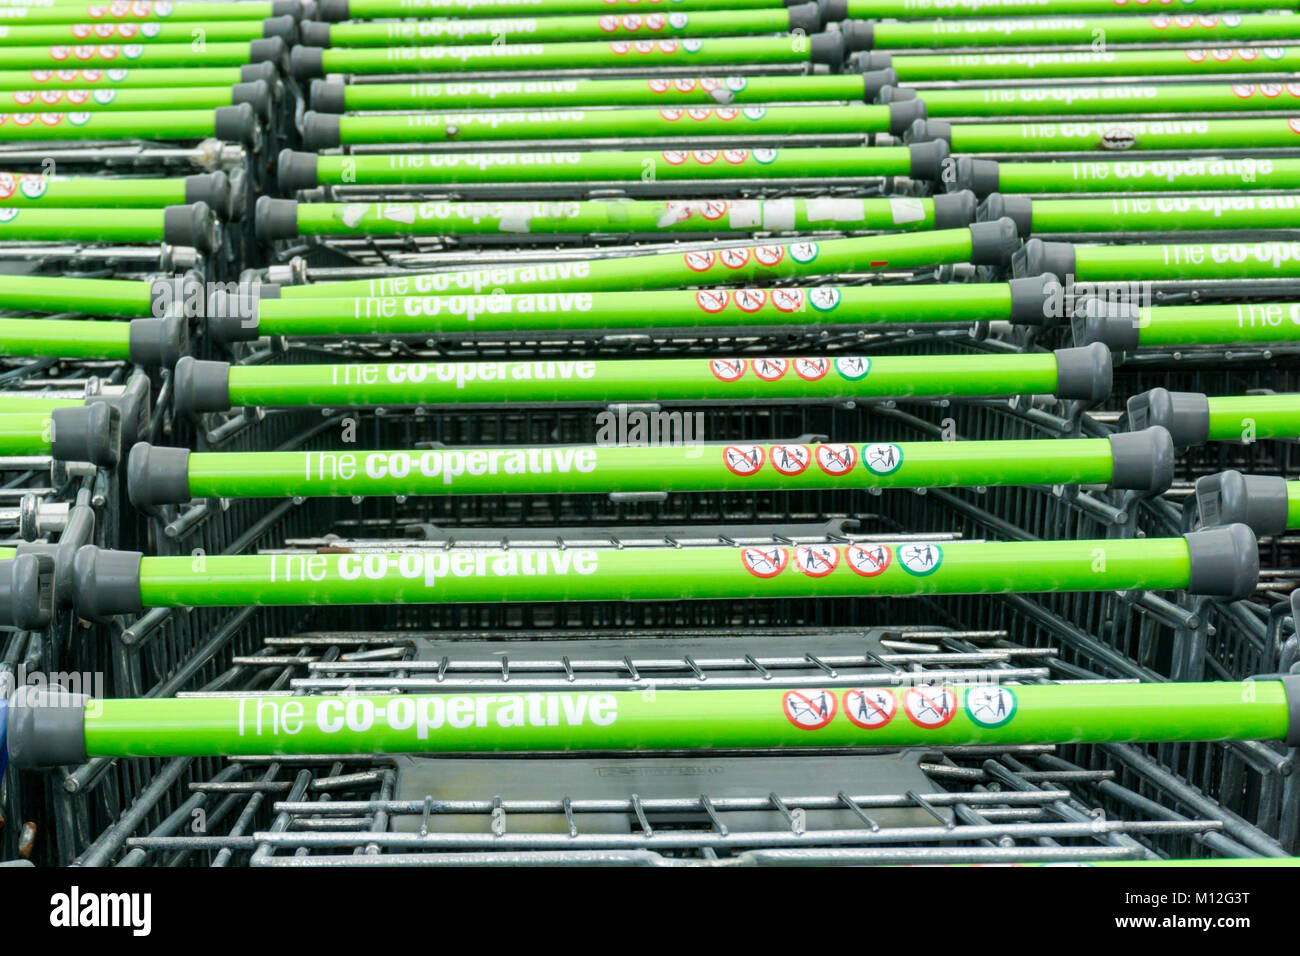 A row of Co-operative supermarket trollies. Stock Photo